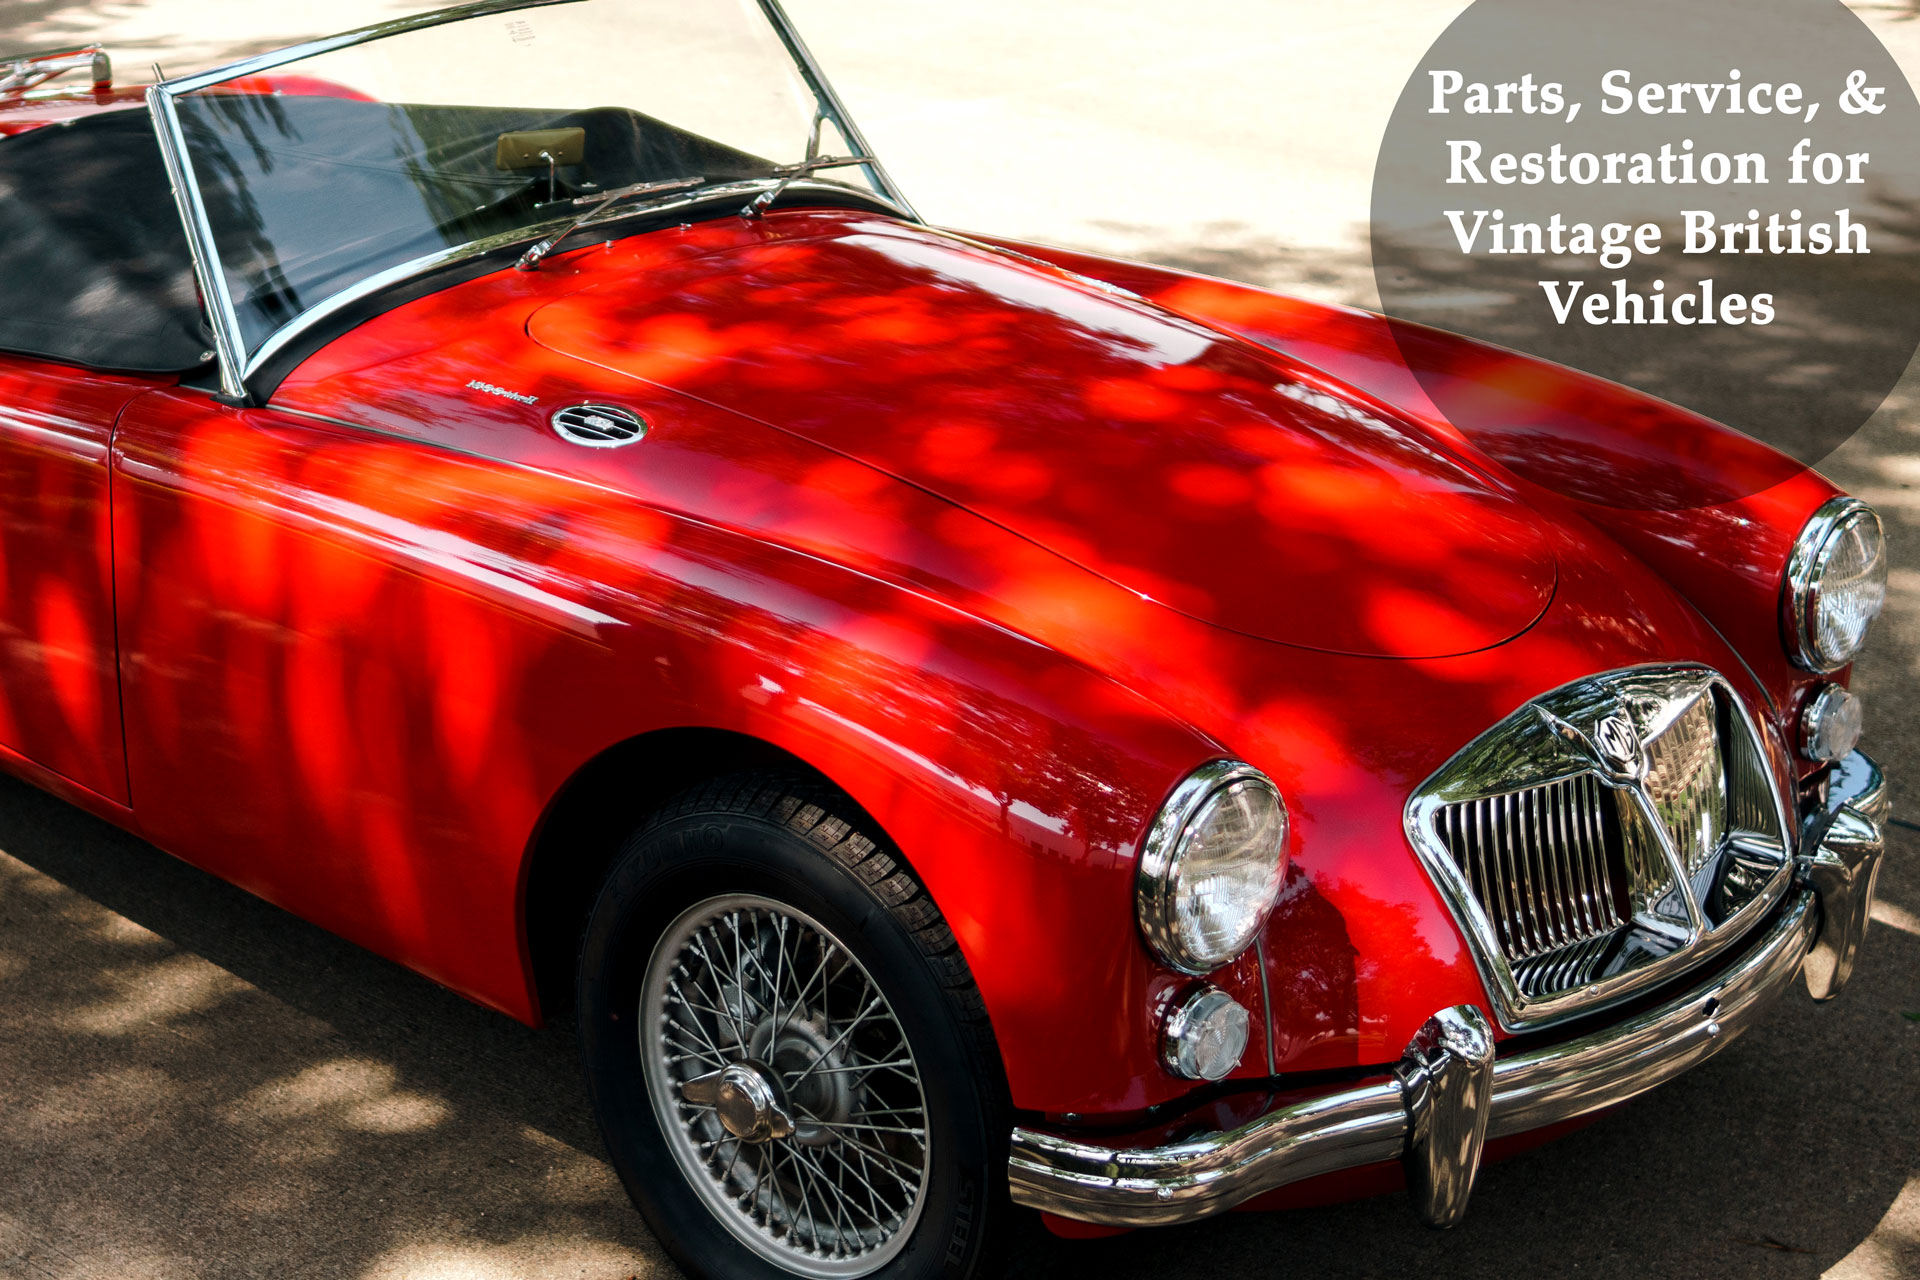 Parts, Service, & Restoration for Vintage British Vehicles